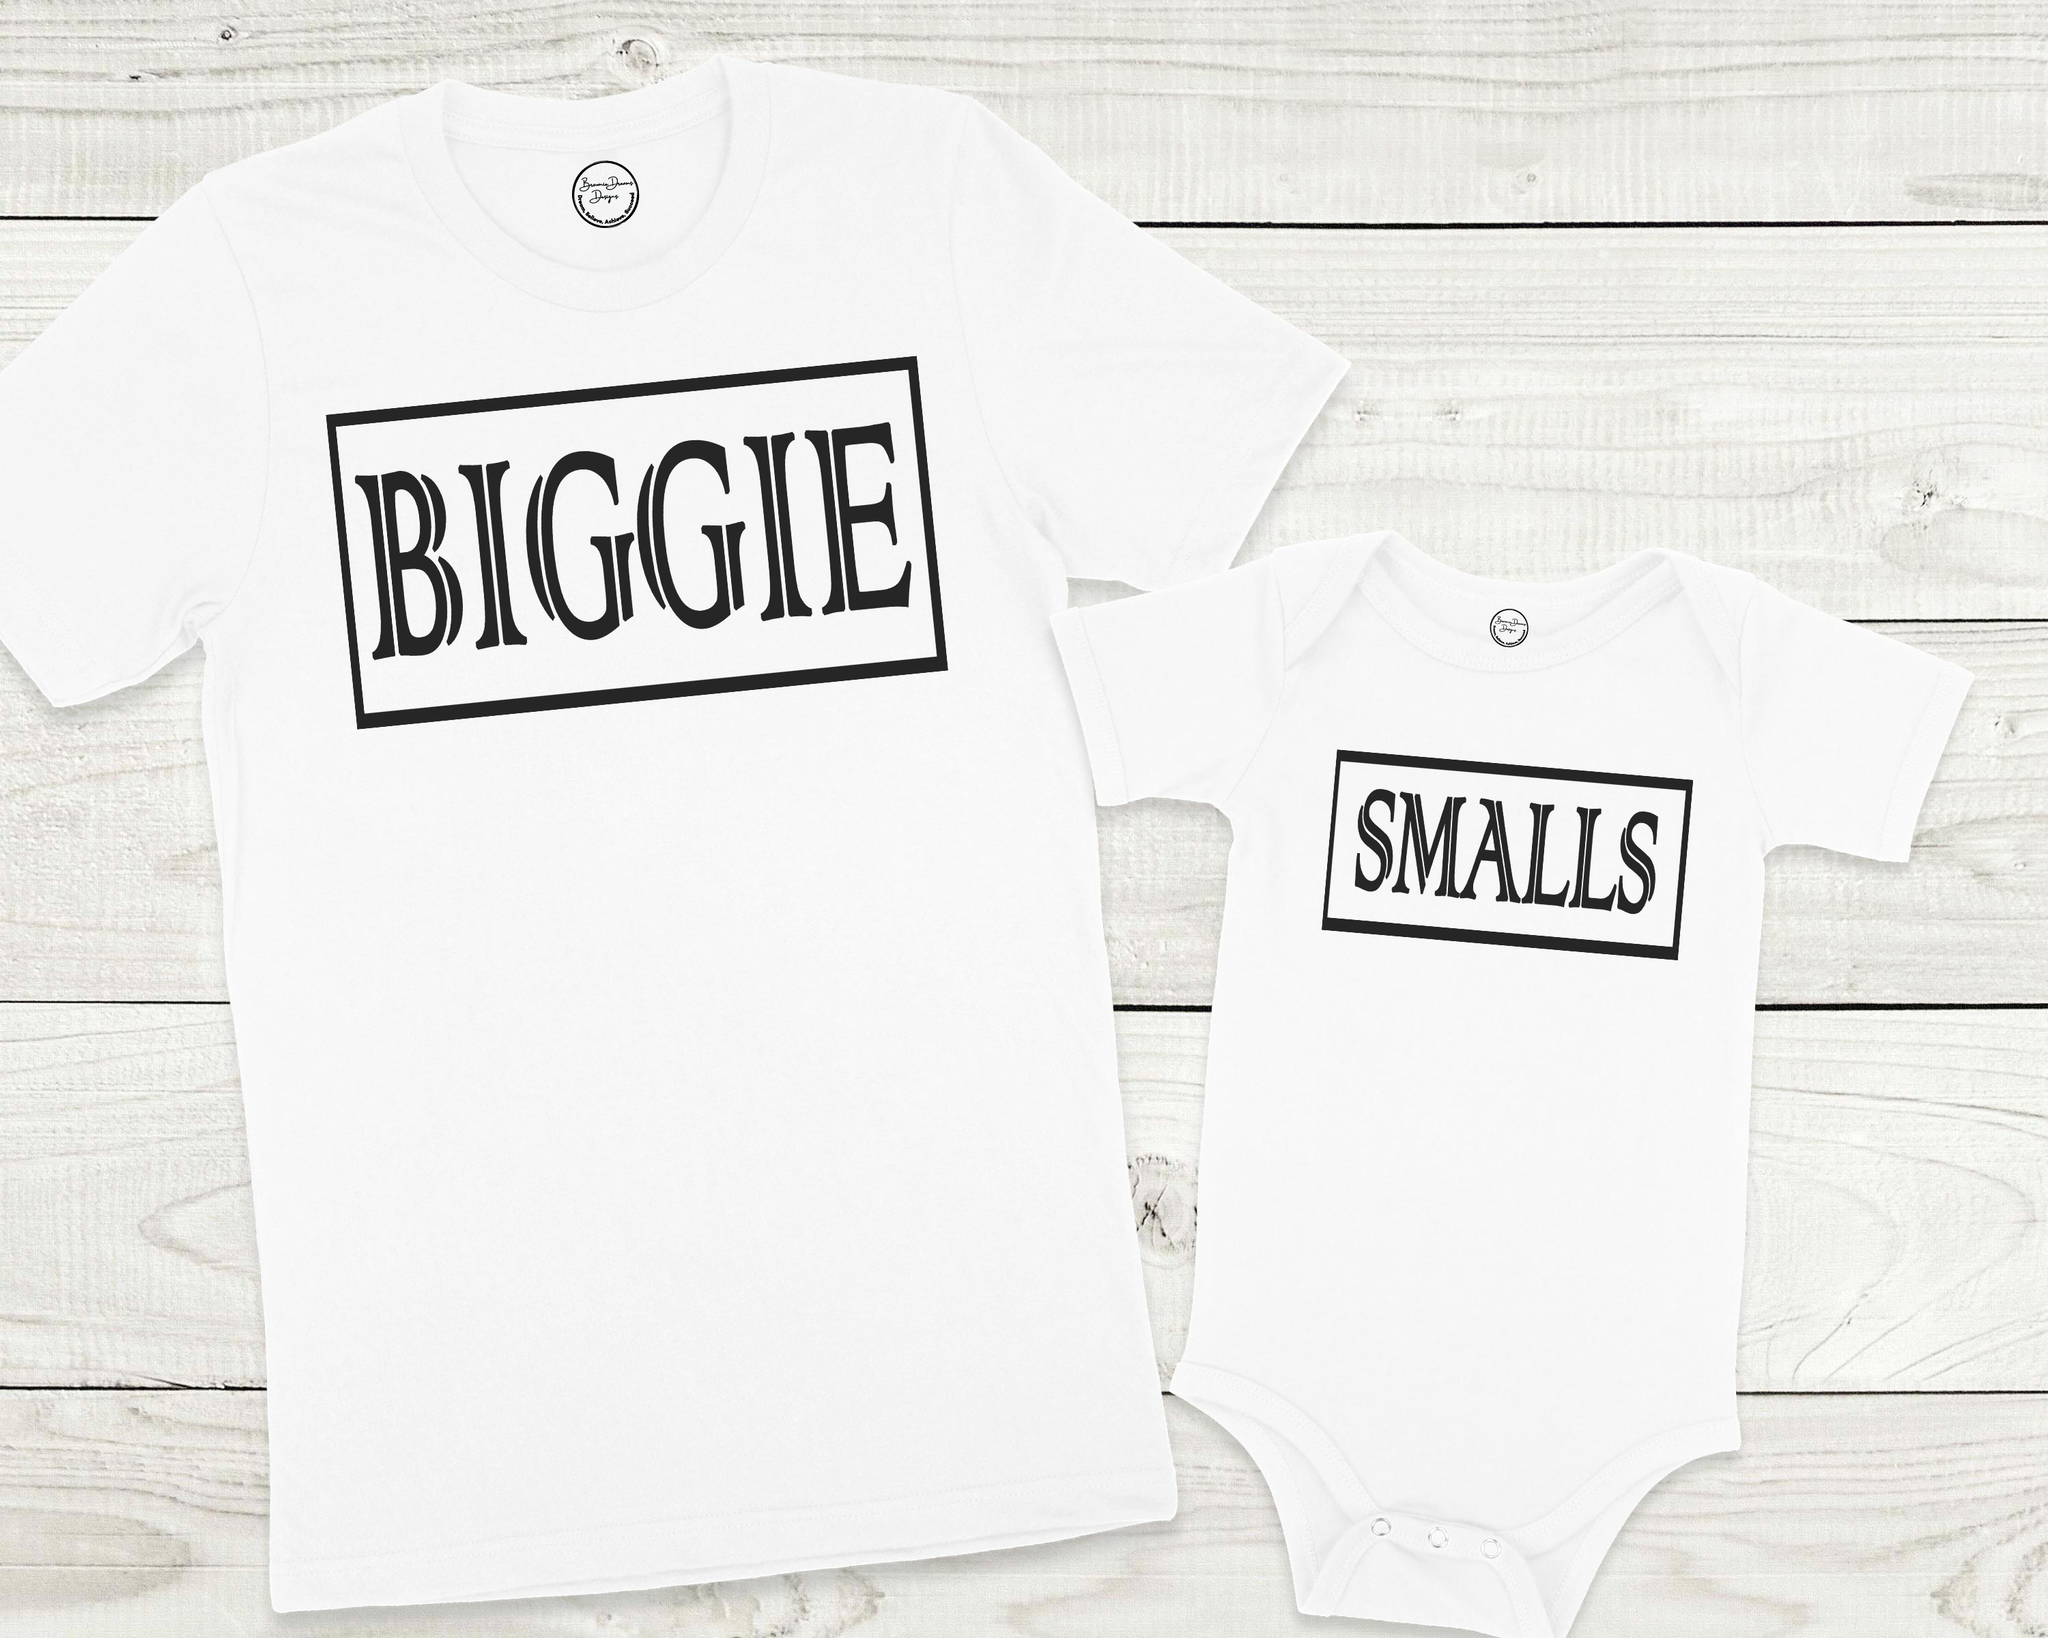 Biggie Smalls Matching Shirt ADULT, BABY & TODDLER SIZES